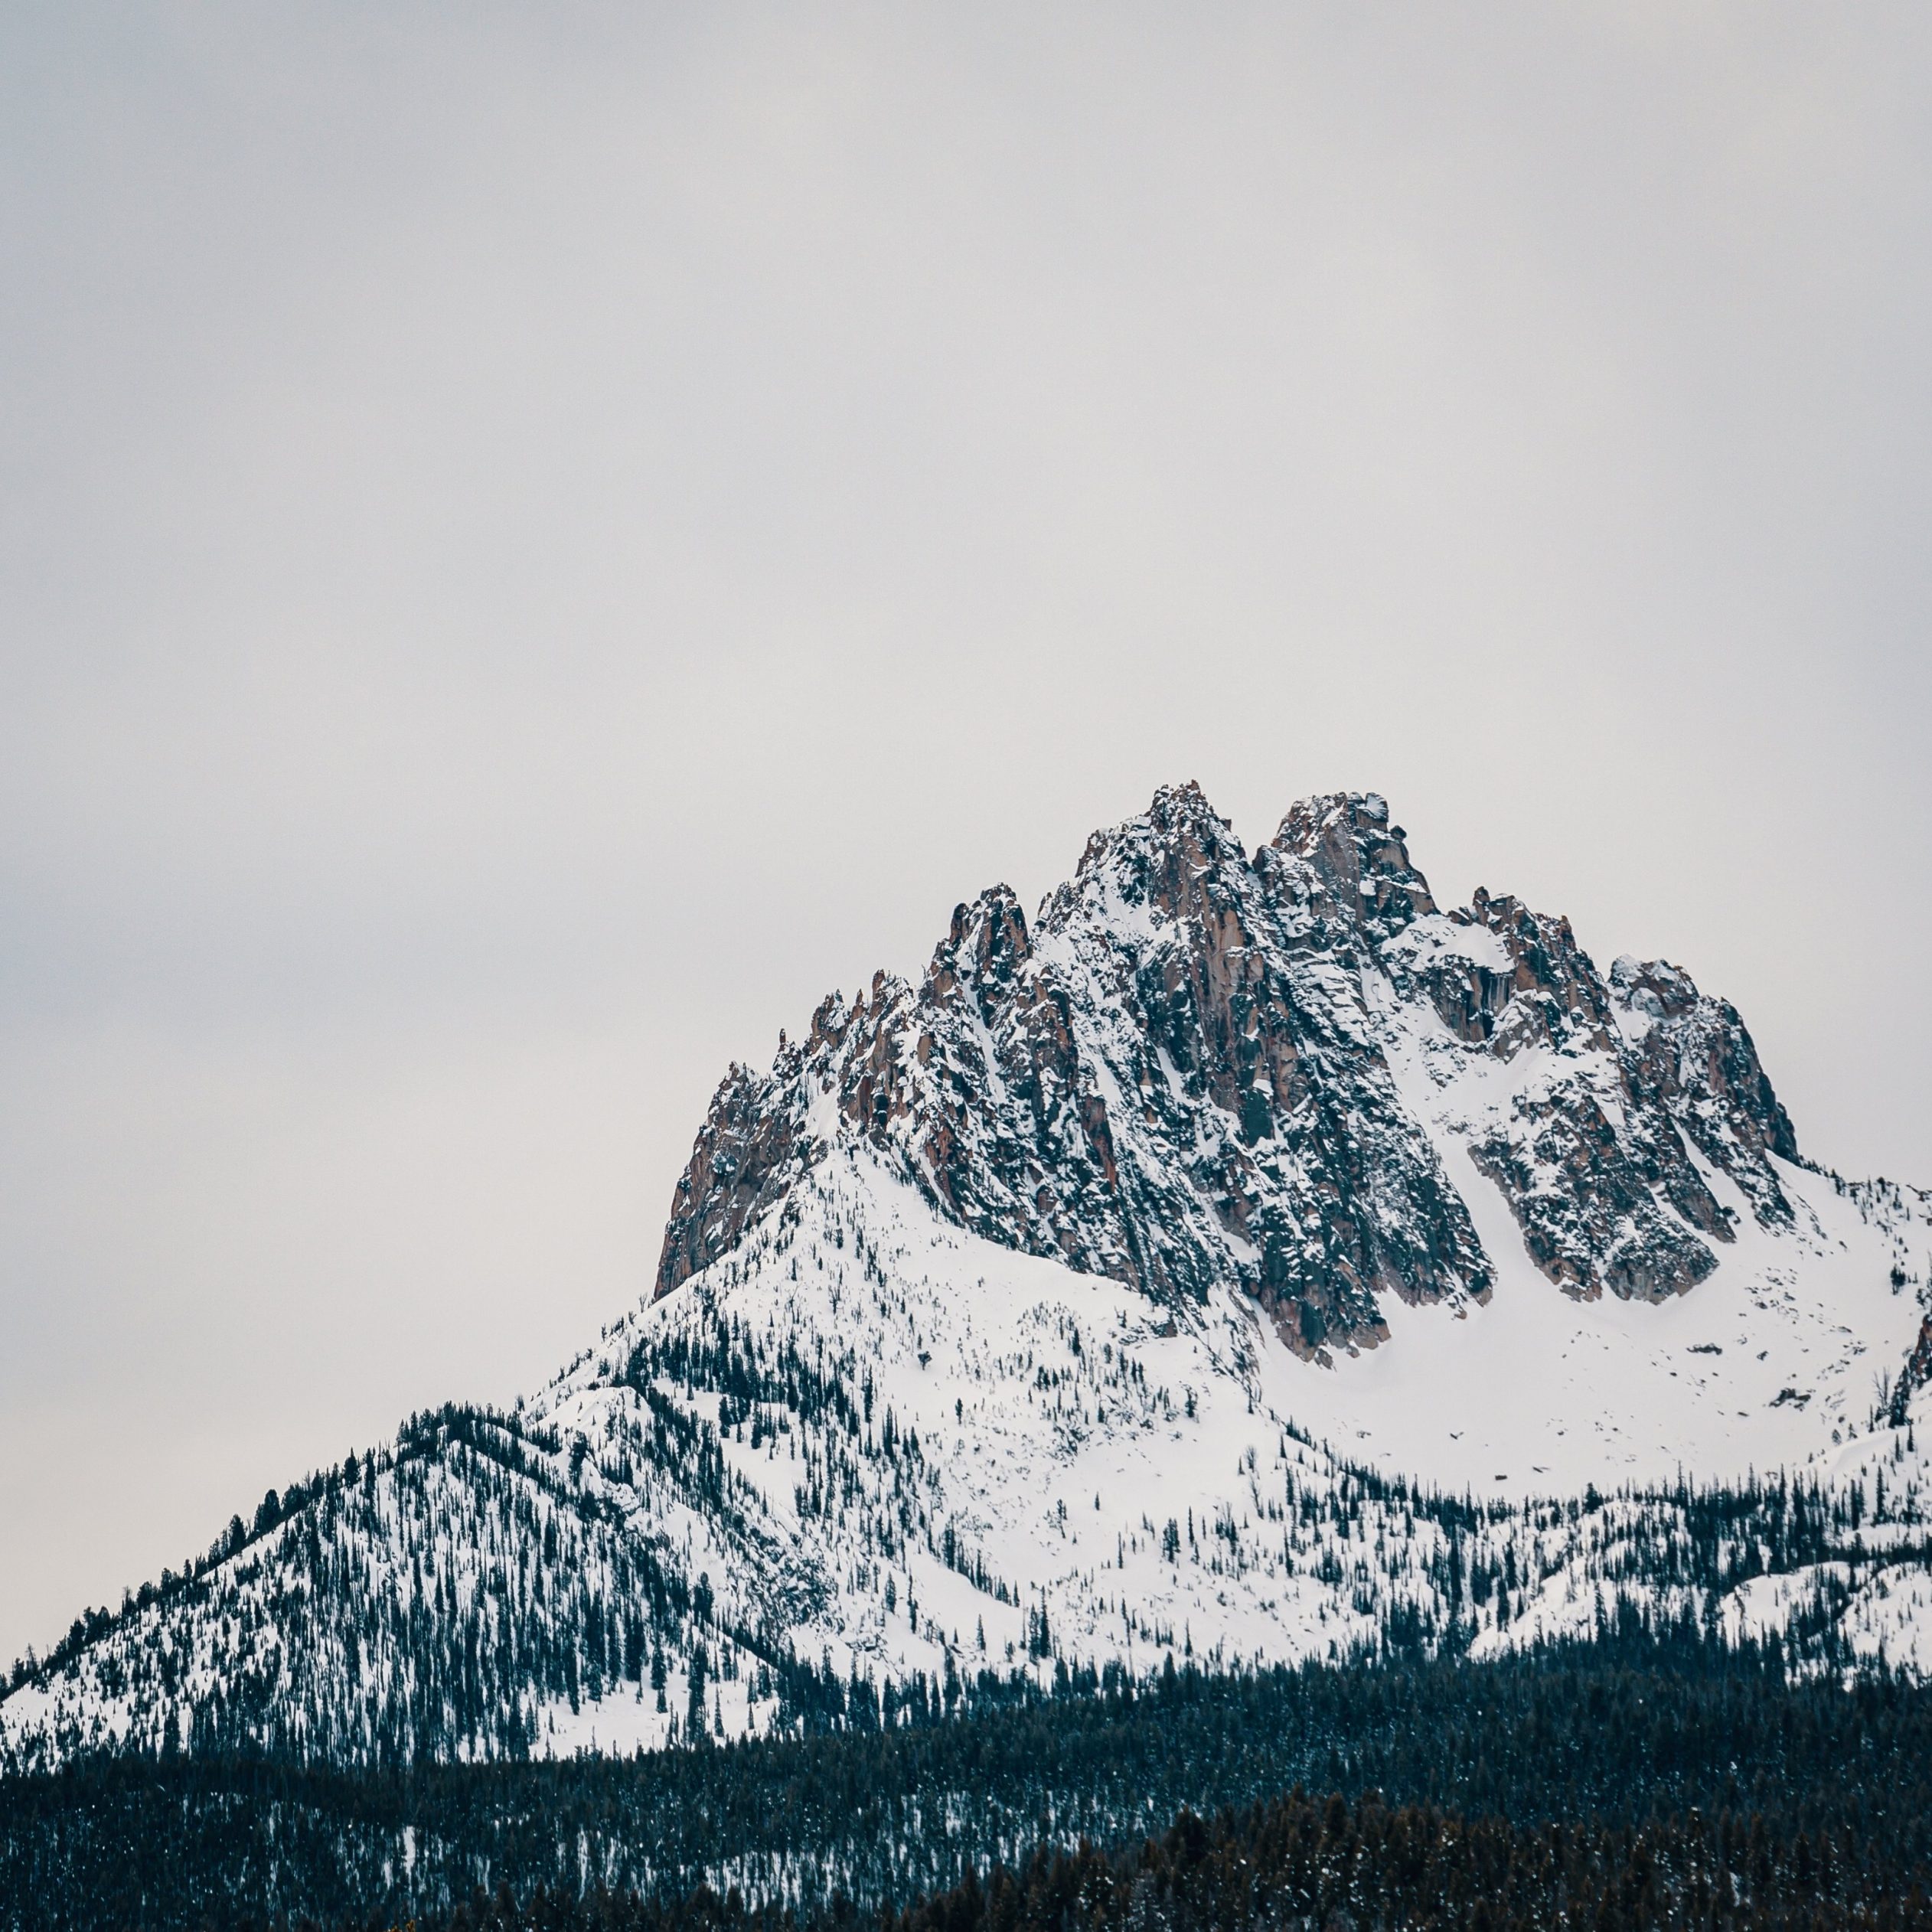 2524x2524 Parallax wallpaper 4k Winter Snow Mountain Peak Rocky iPad Wallpaper 2524x2524 pixels resolution